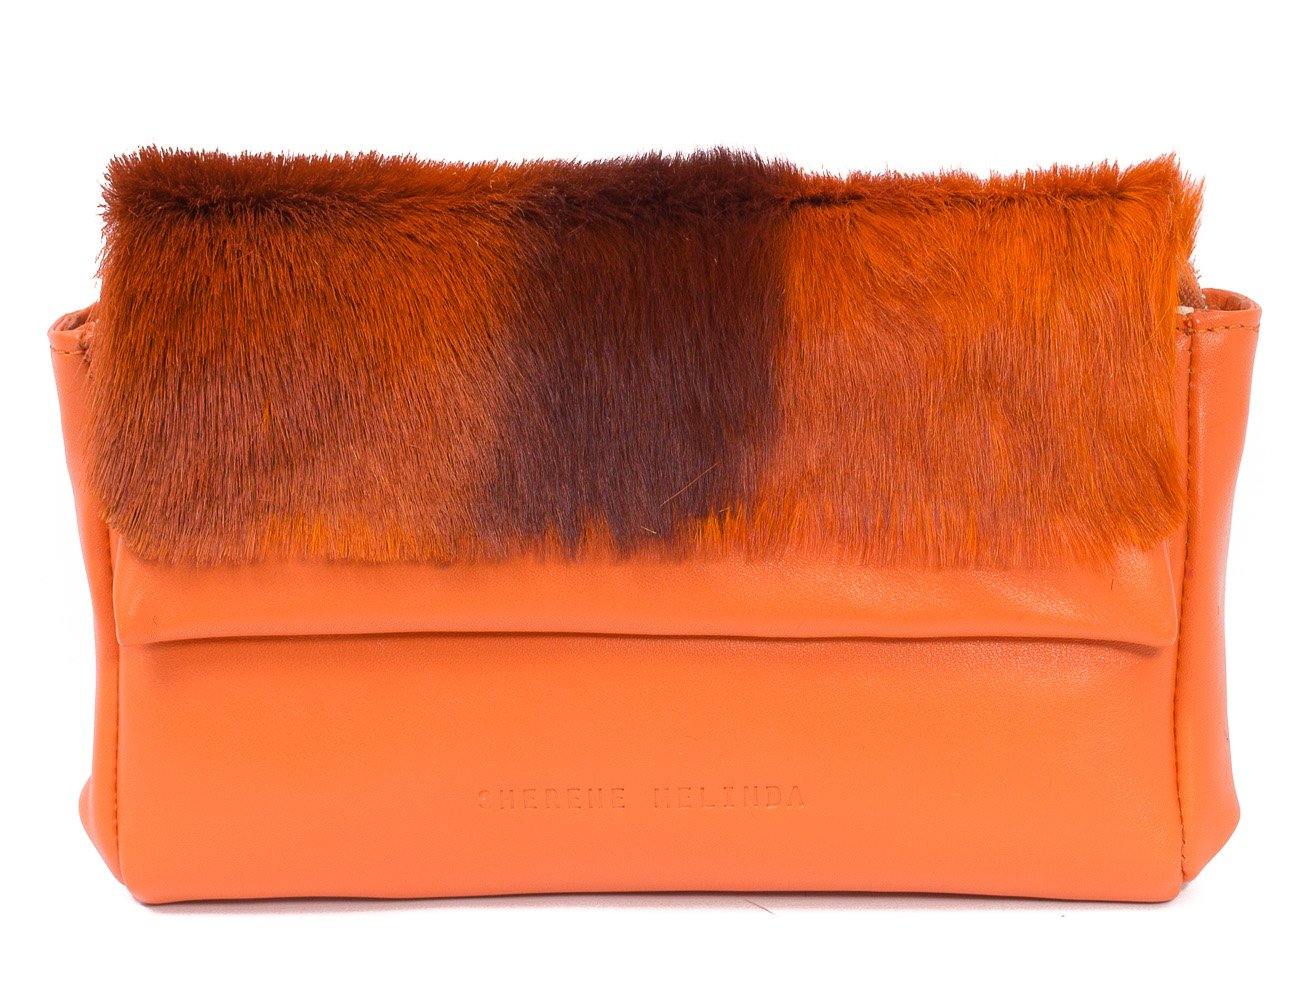 sherene melinda springbok hair-on-hide orange leather Sophy SS18 Clutch Bag stripe front strap